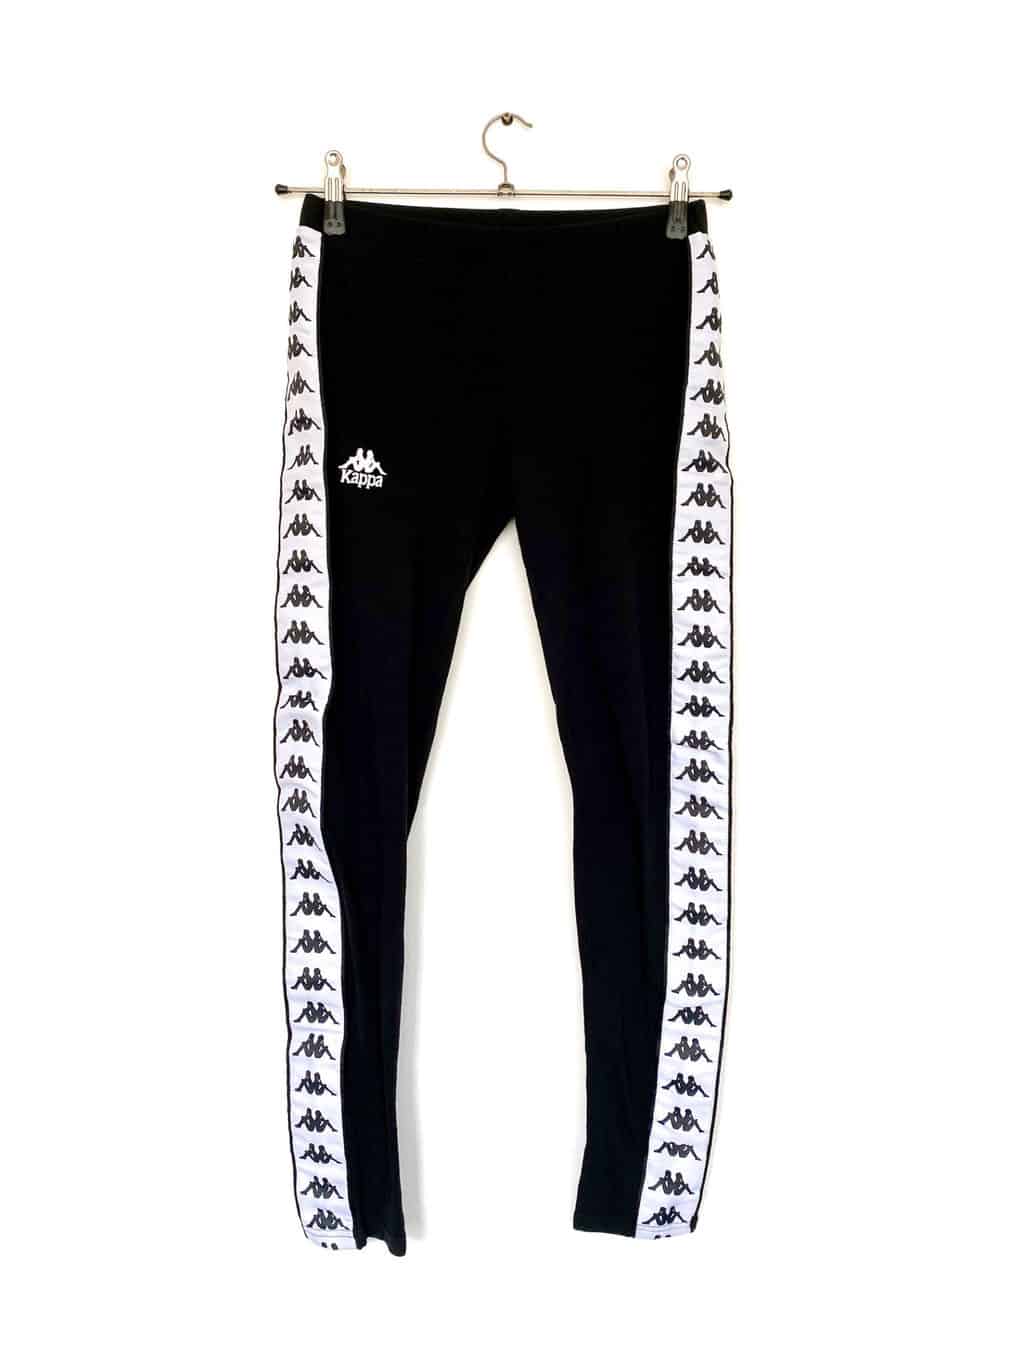 Kappa leggings with logo sides, black & white - S